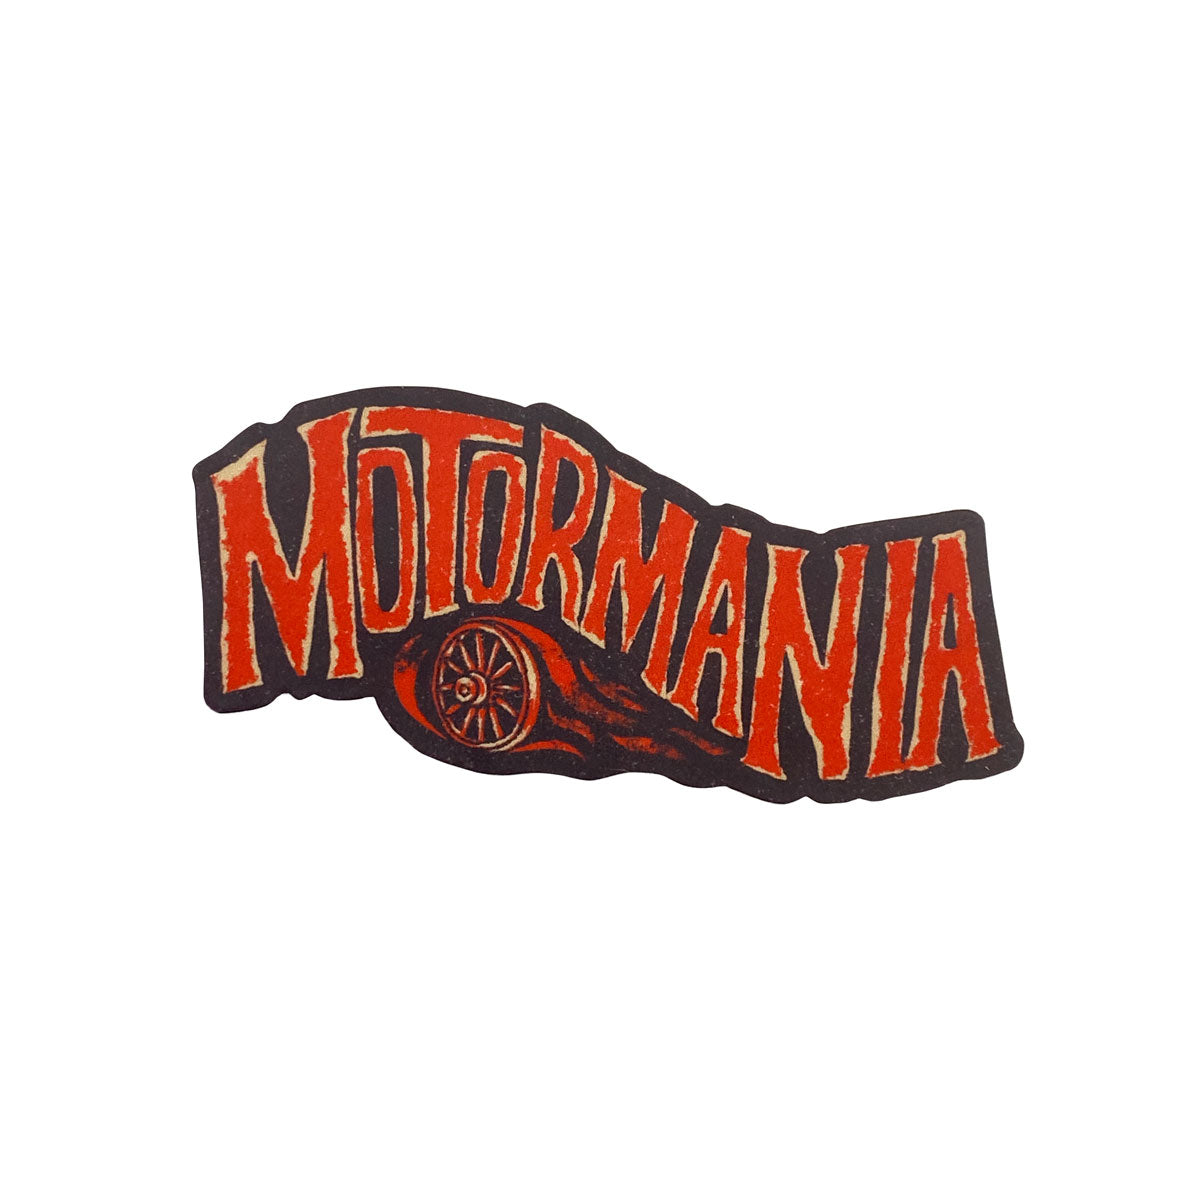 Motormania Sticker - Whosits Whatsits